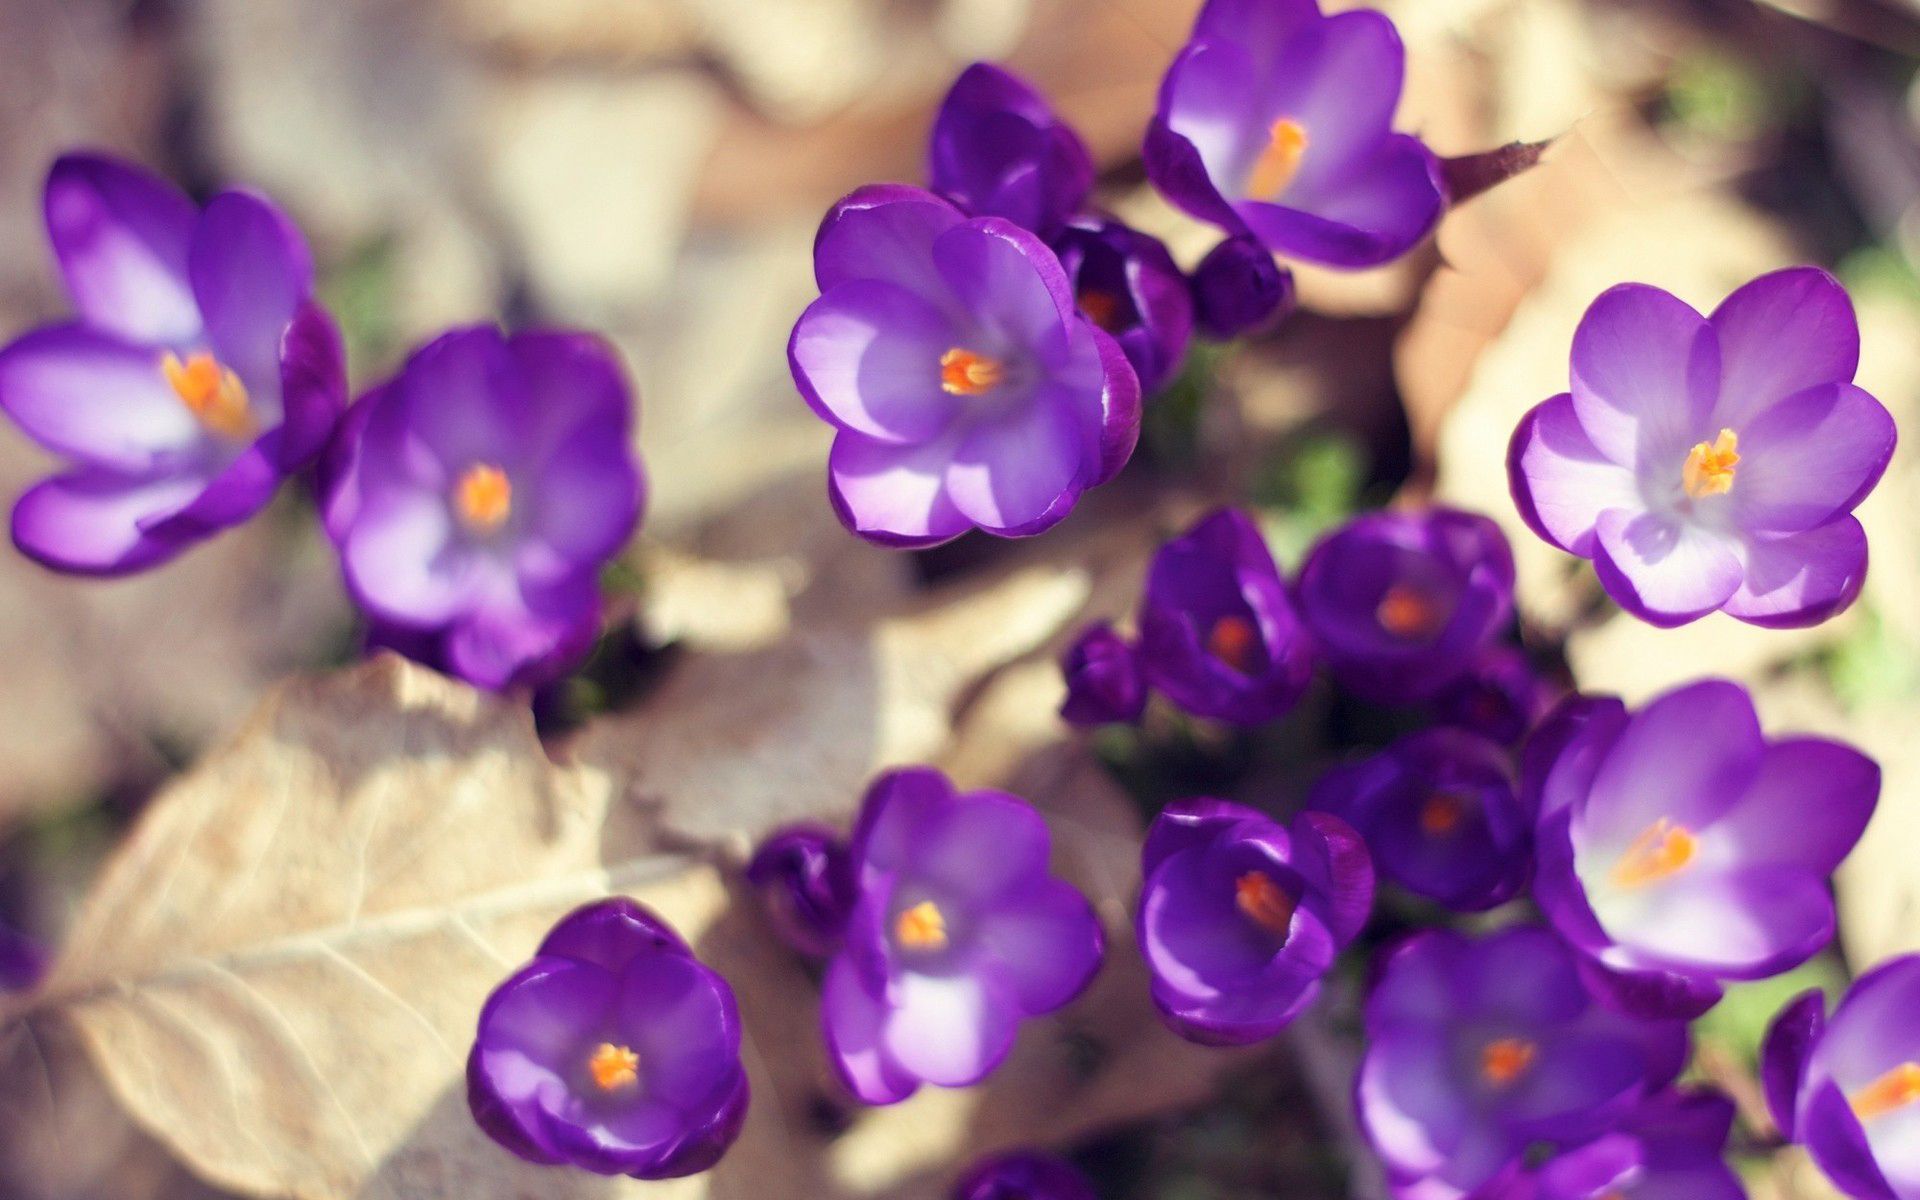 Small Group of Purple Crocus Flowers